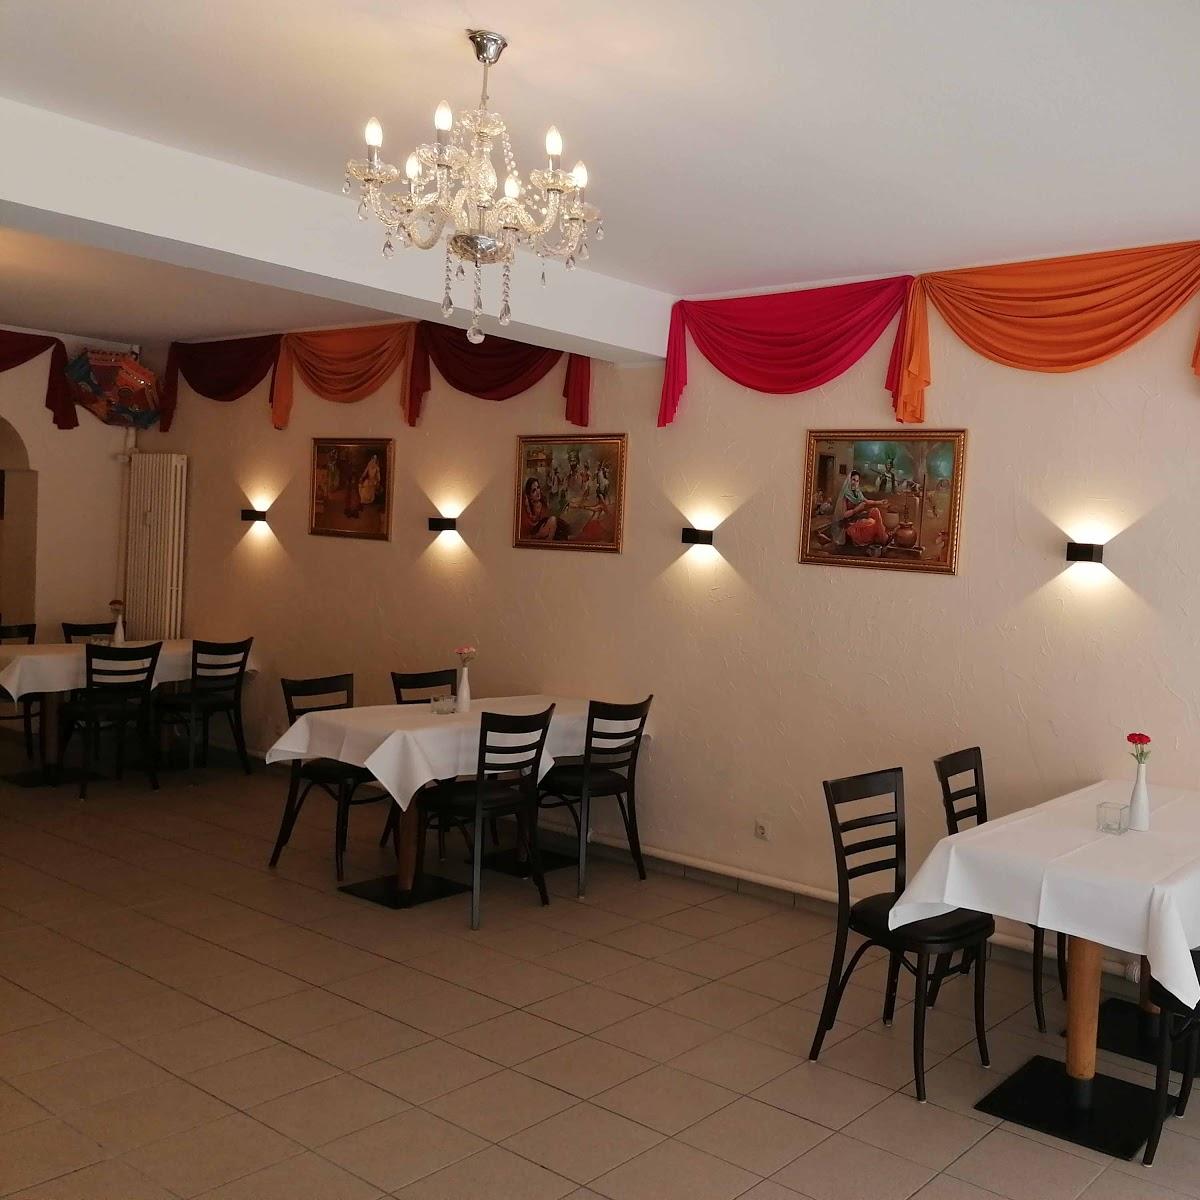 Restaurant "Maharaja.in" in Gernsbach